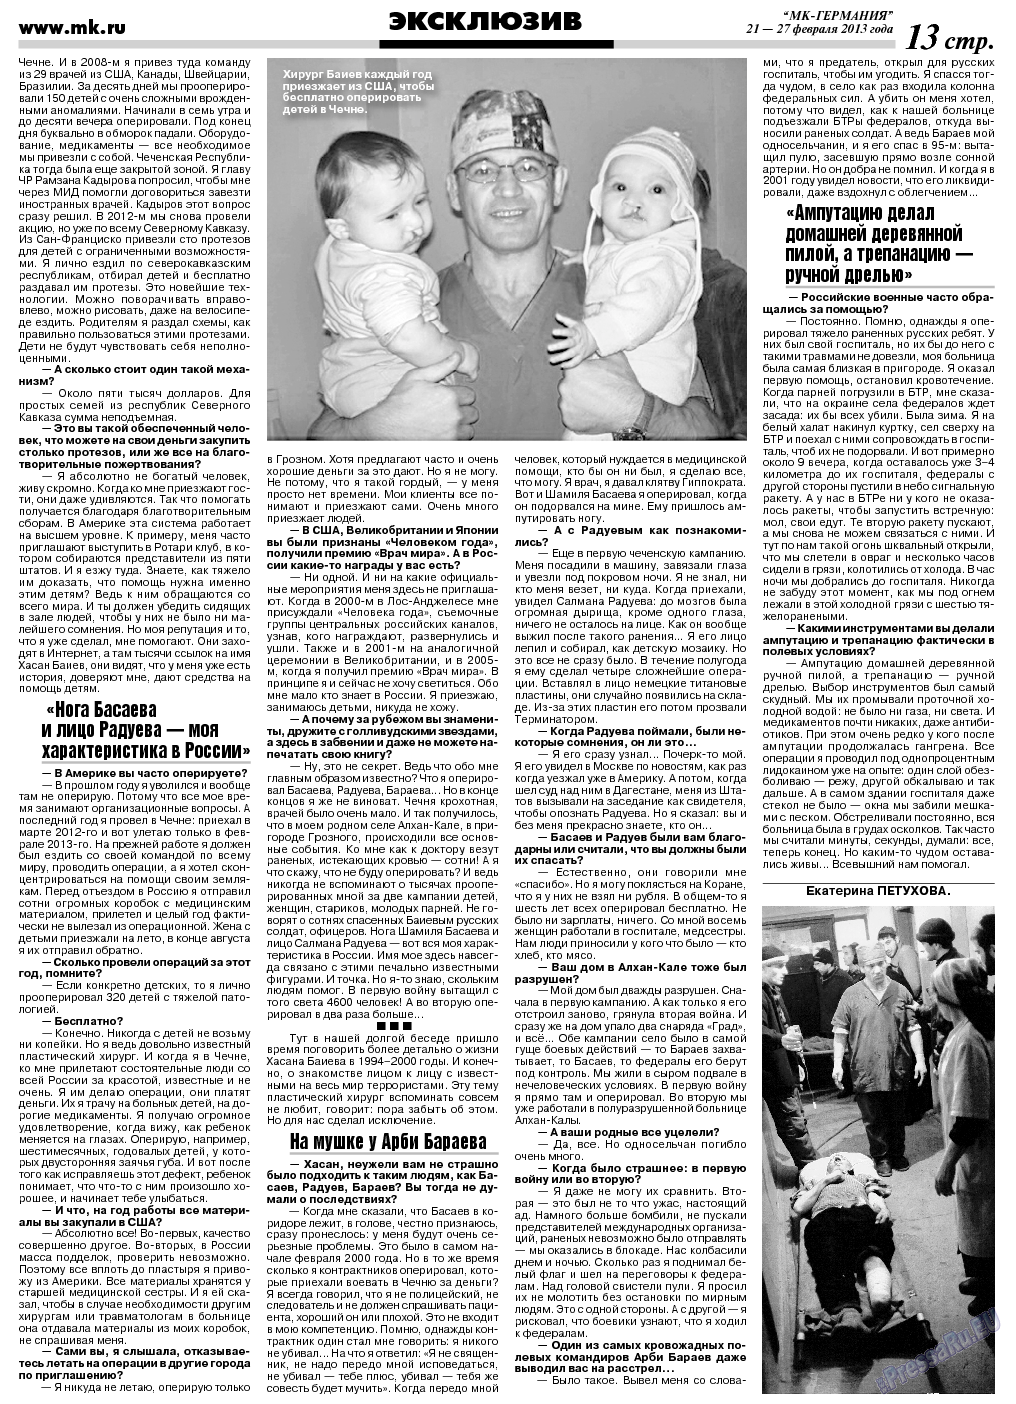 МК-Германия, газета. 2013 №8 стр.13